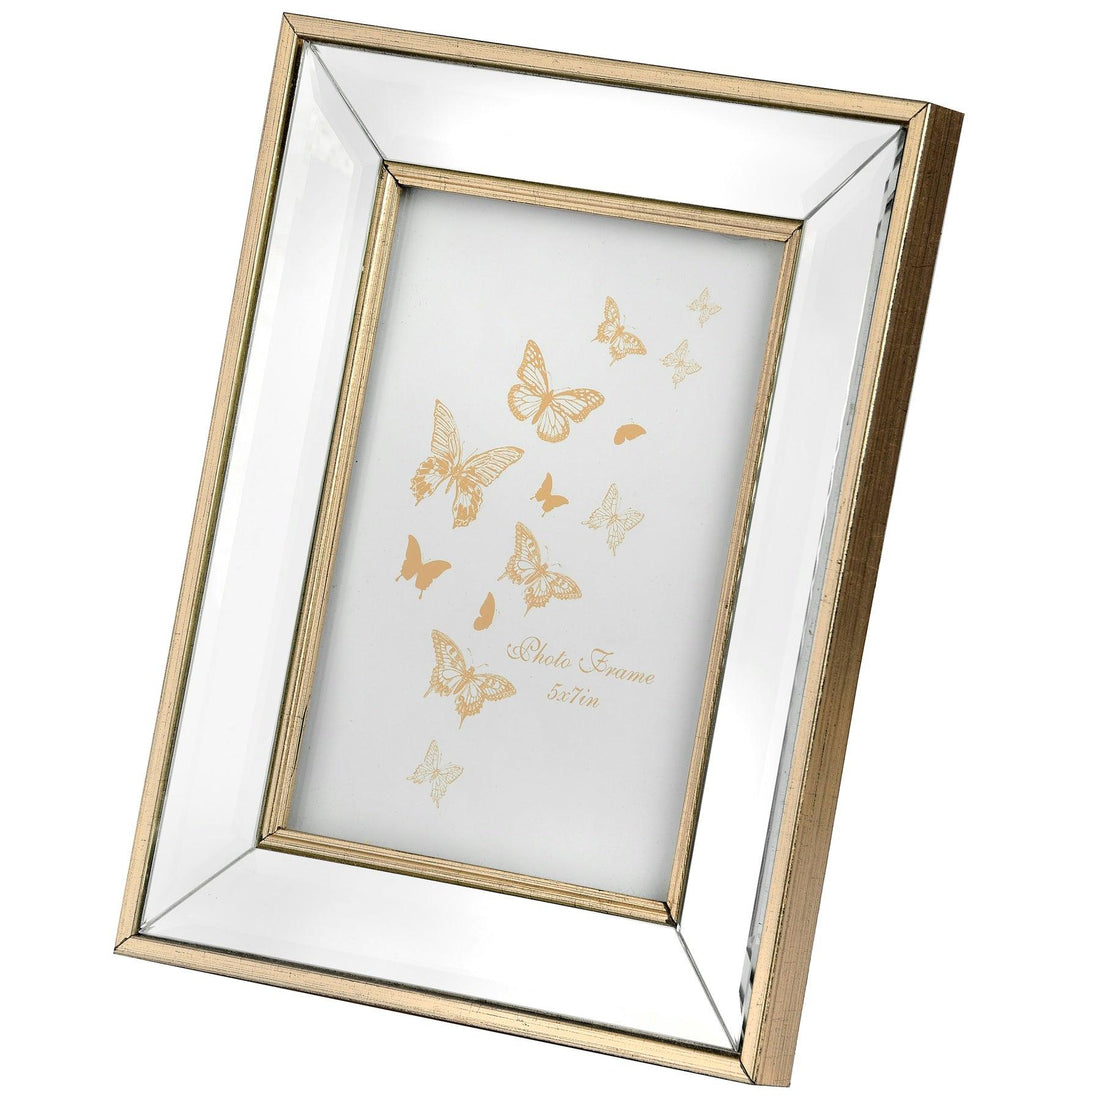 Small Rectangle Mirror Bordered Photo Frame 4x6 - £25.95 - Gifts & Accessories > Photo Frames > Single Photo Frames 